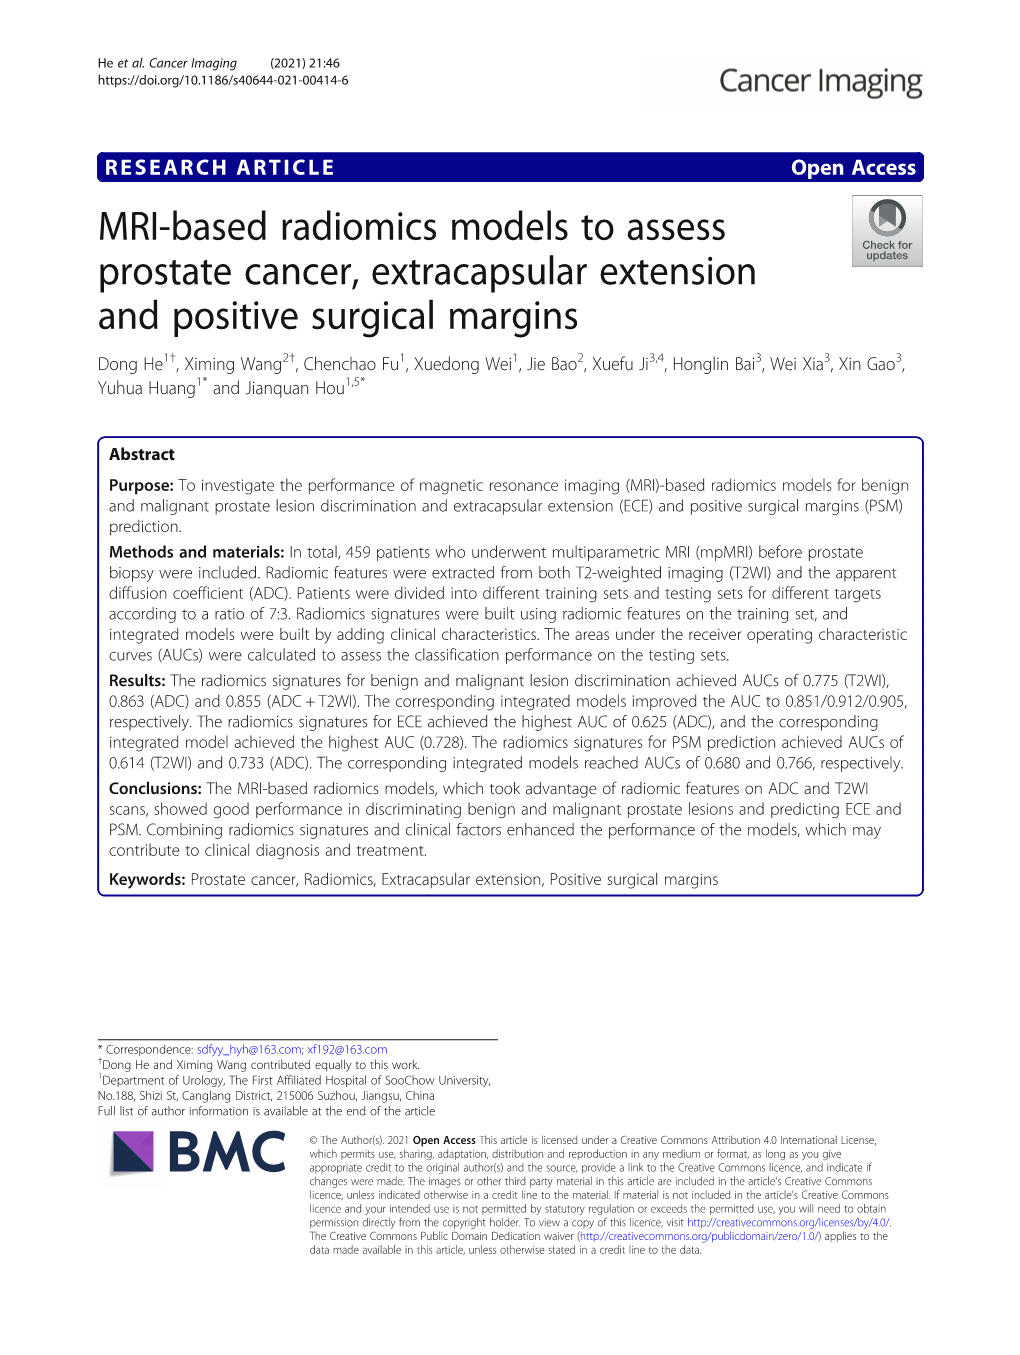 MRI-Based Radiomics Models to Assess Prostate Cancer